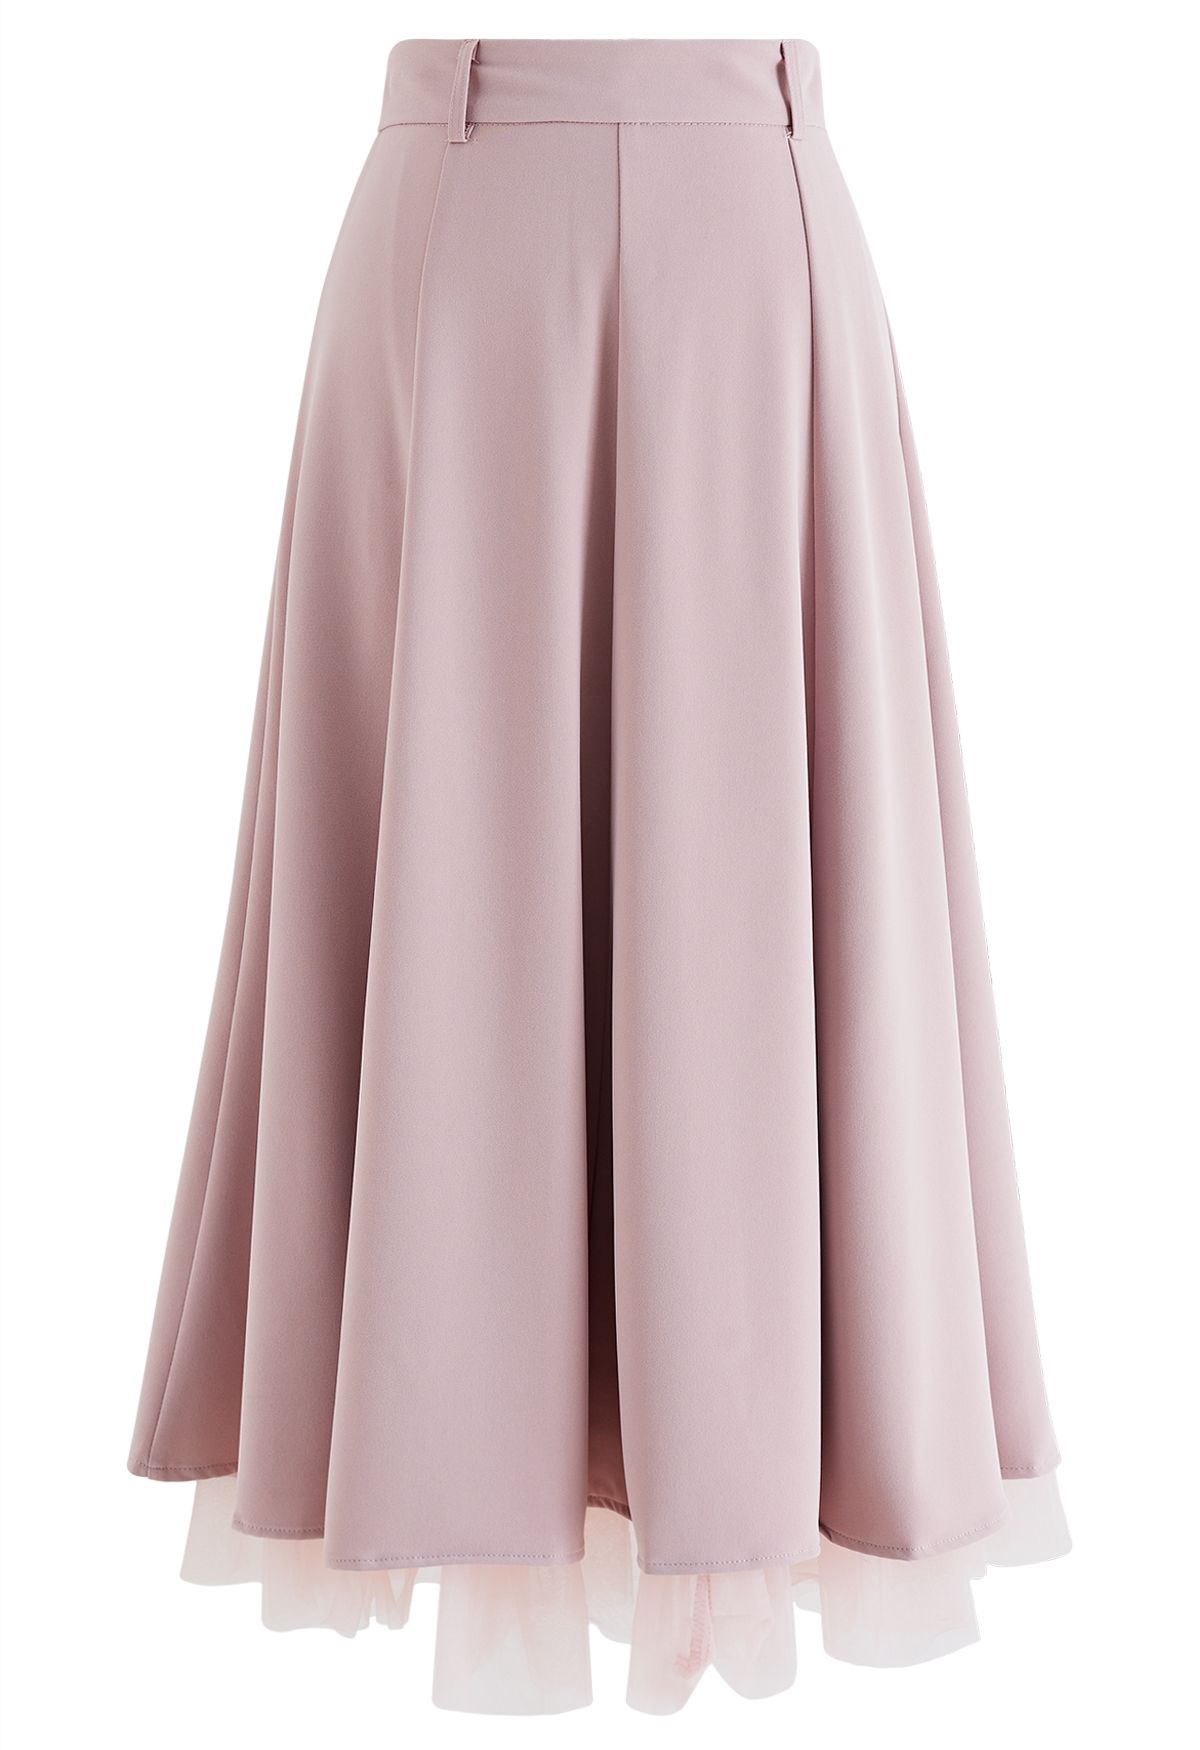 Mesh Spliced Hem Midi Skirt in Pink - Retro, Indie and Unique Fashion